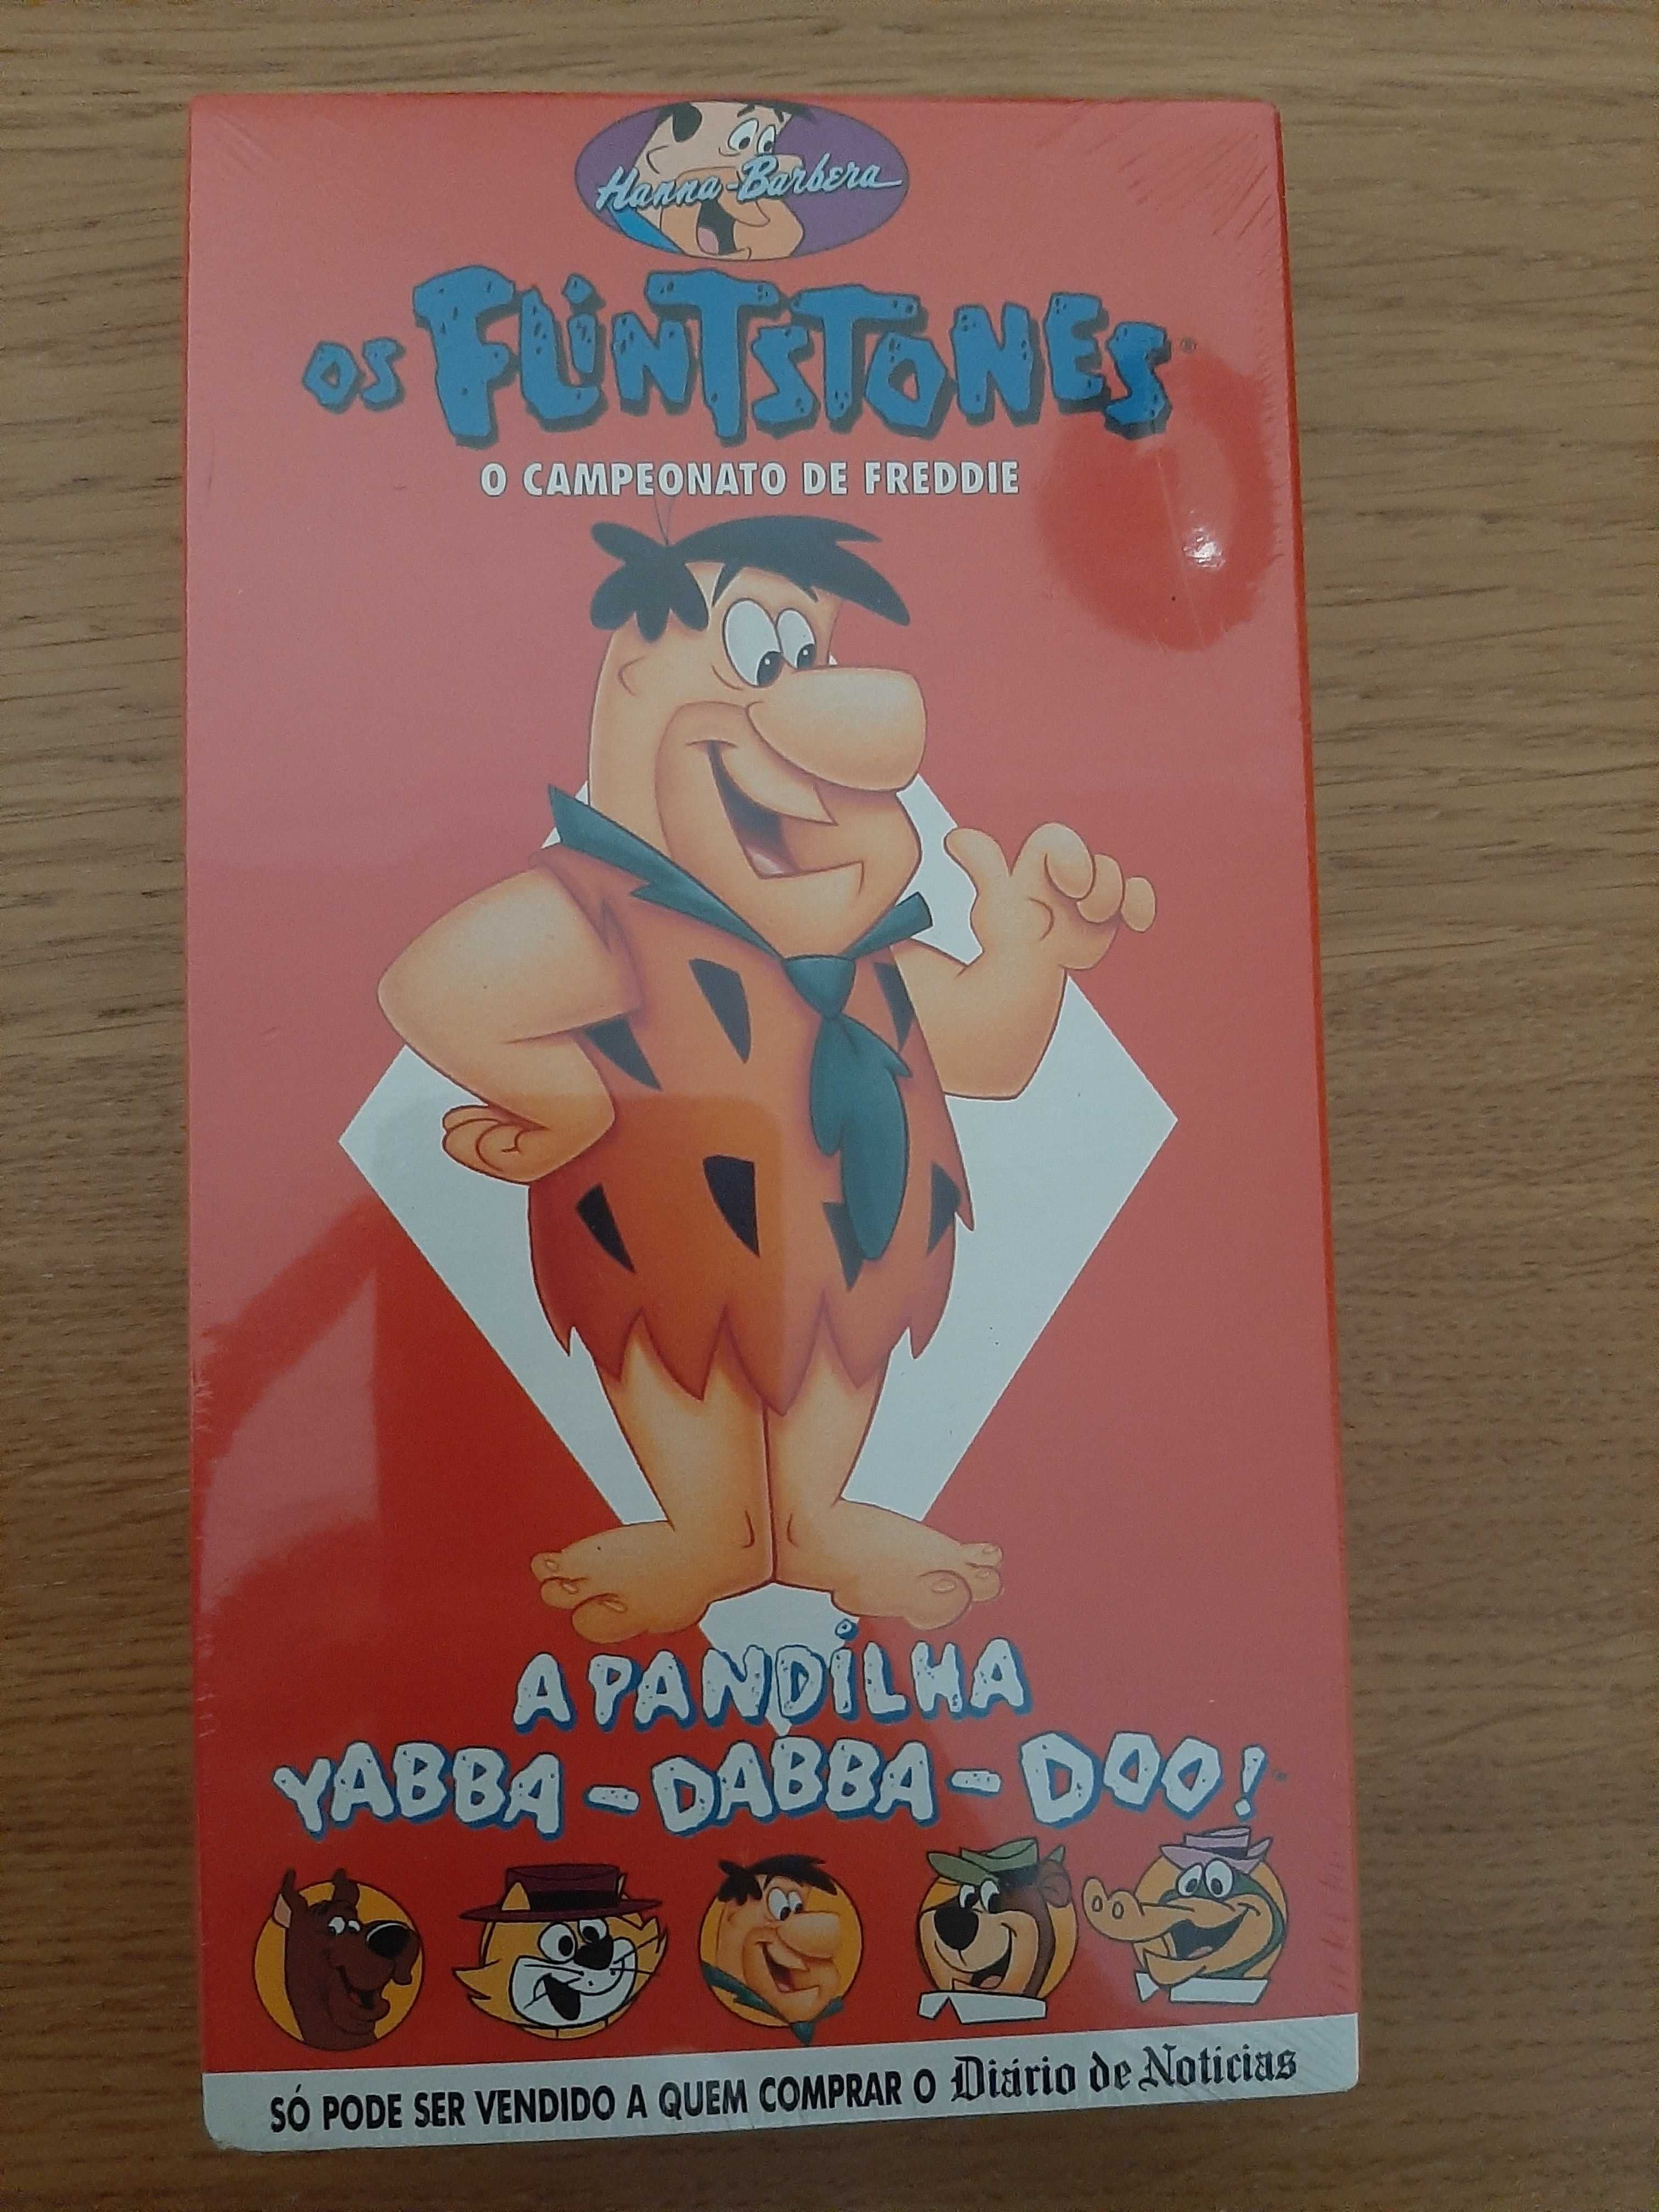 VHS "Os Flintstones"